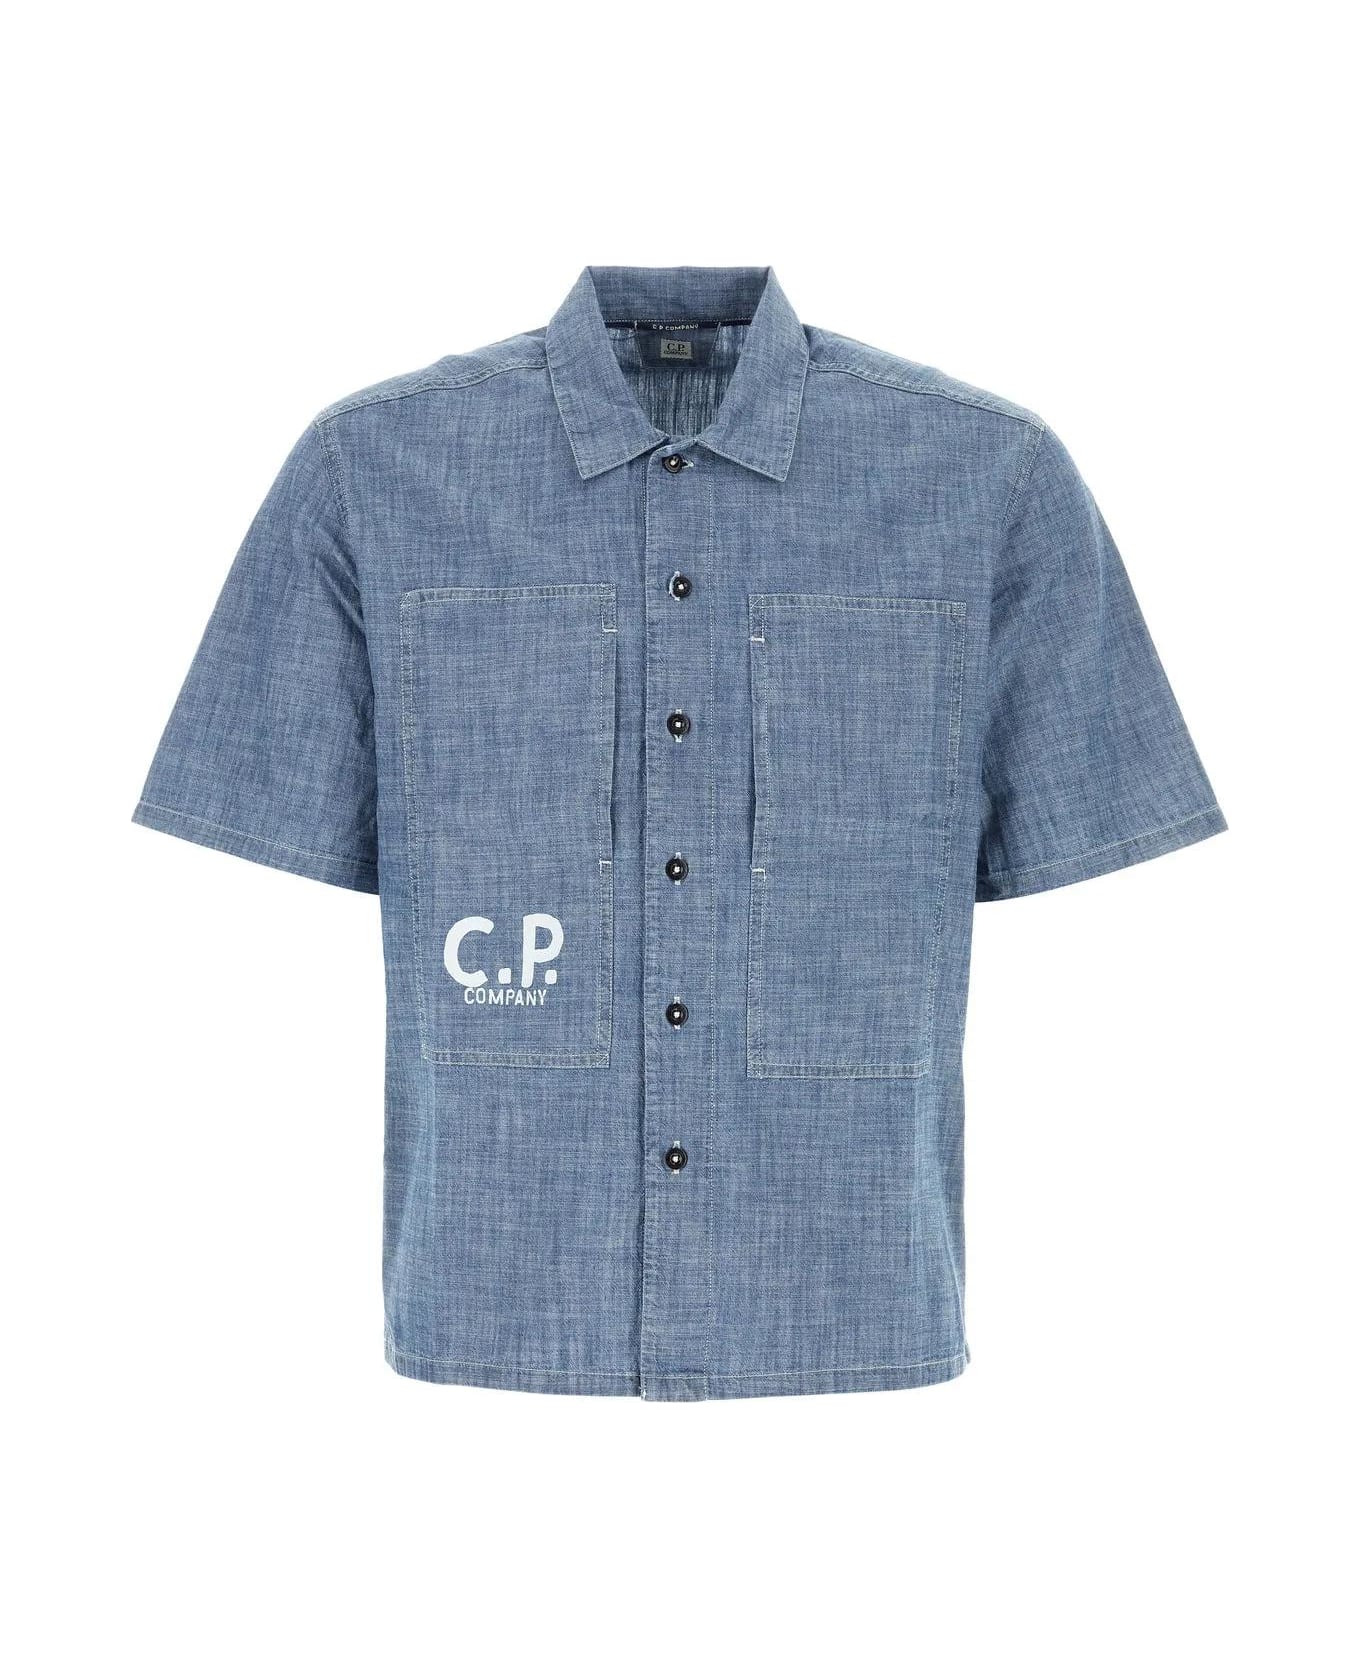 C.P. Company Denim Shirt - STONEBLEACH